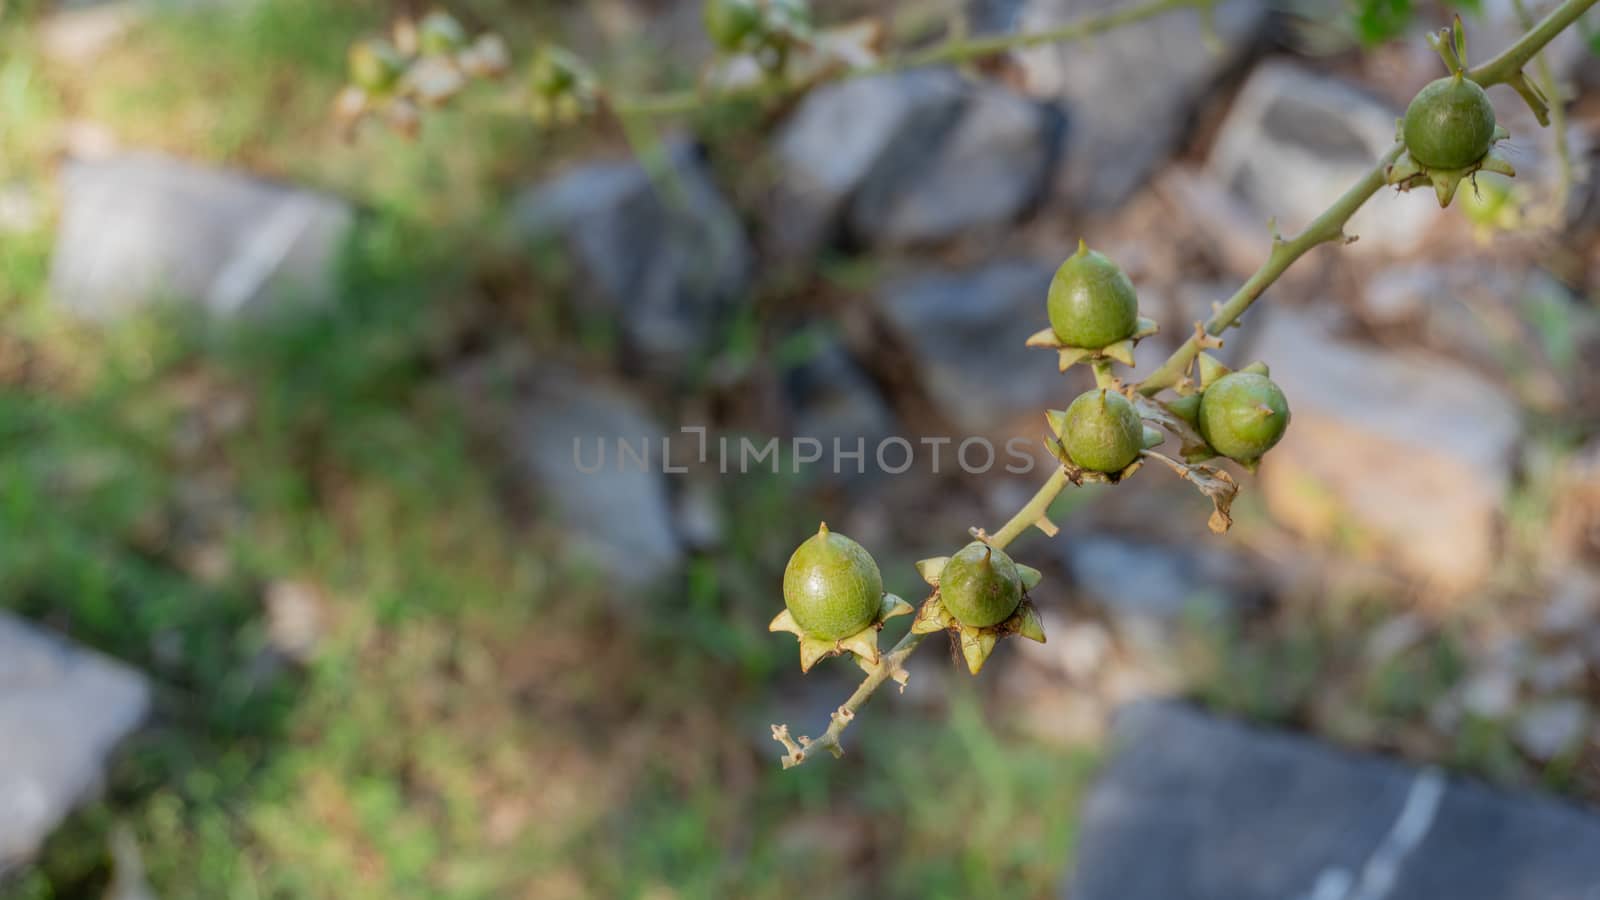 A close-up of Lagerstroemia floribunda Jack fruit in the garden